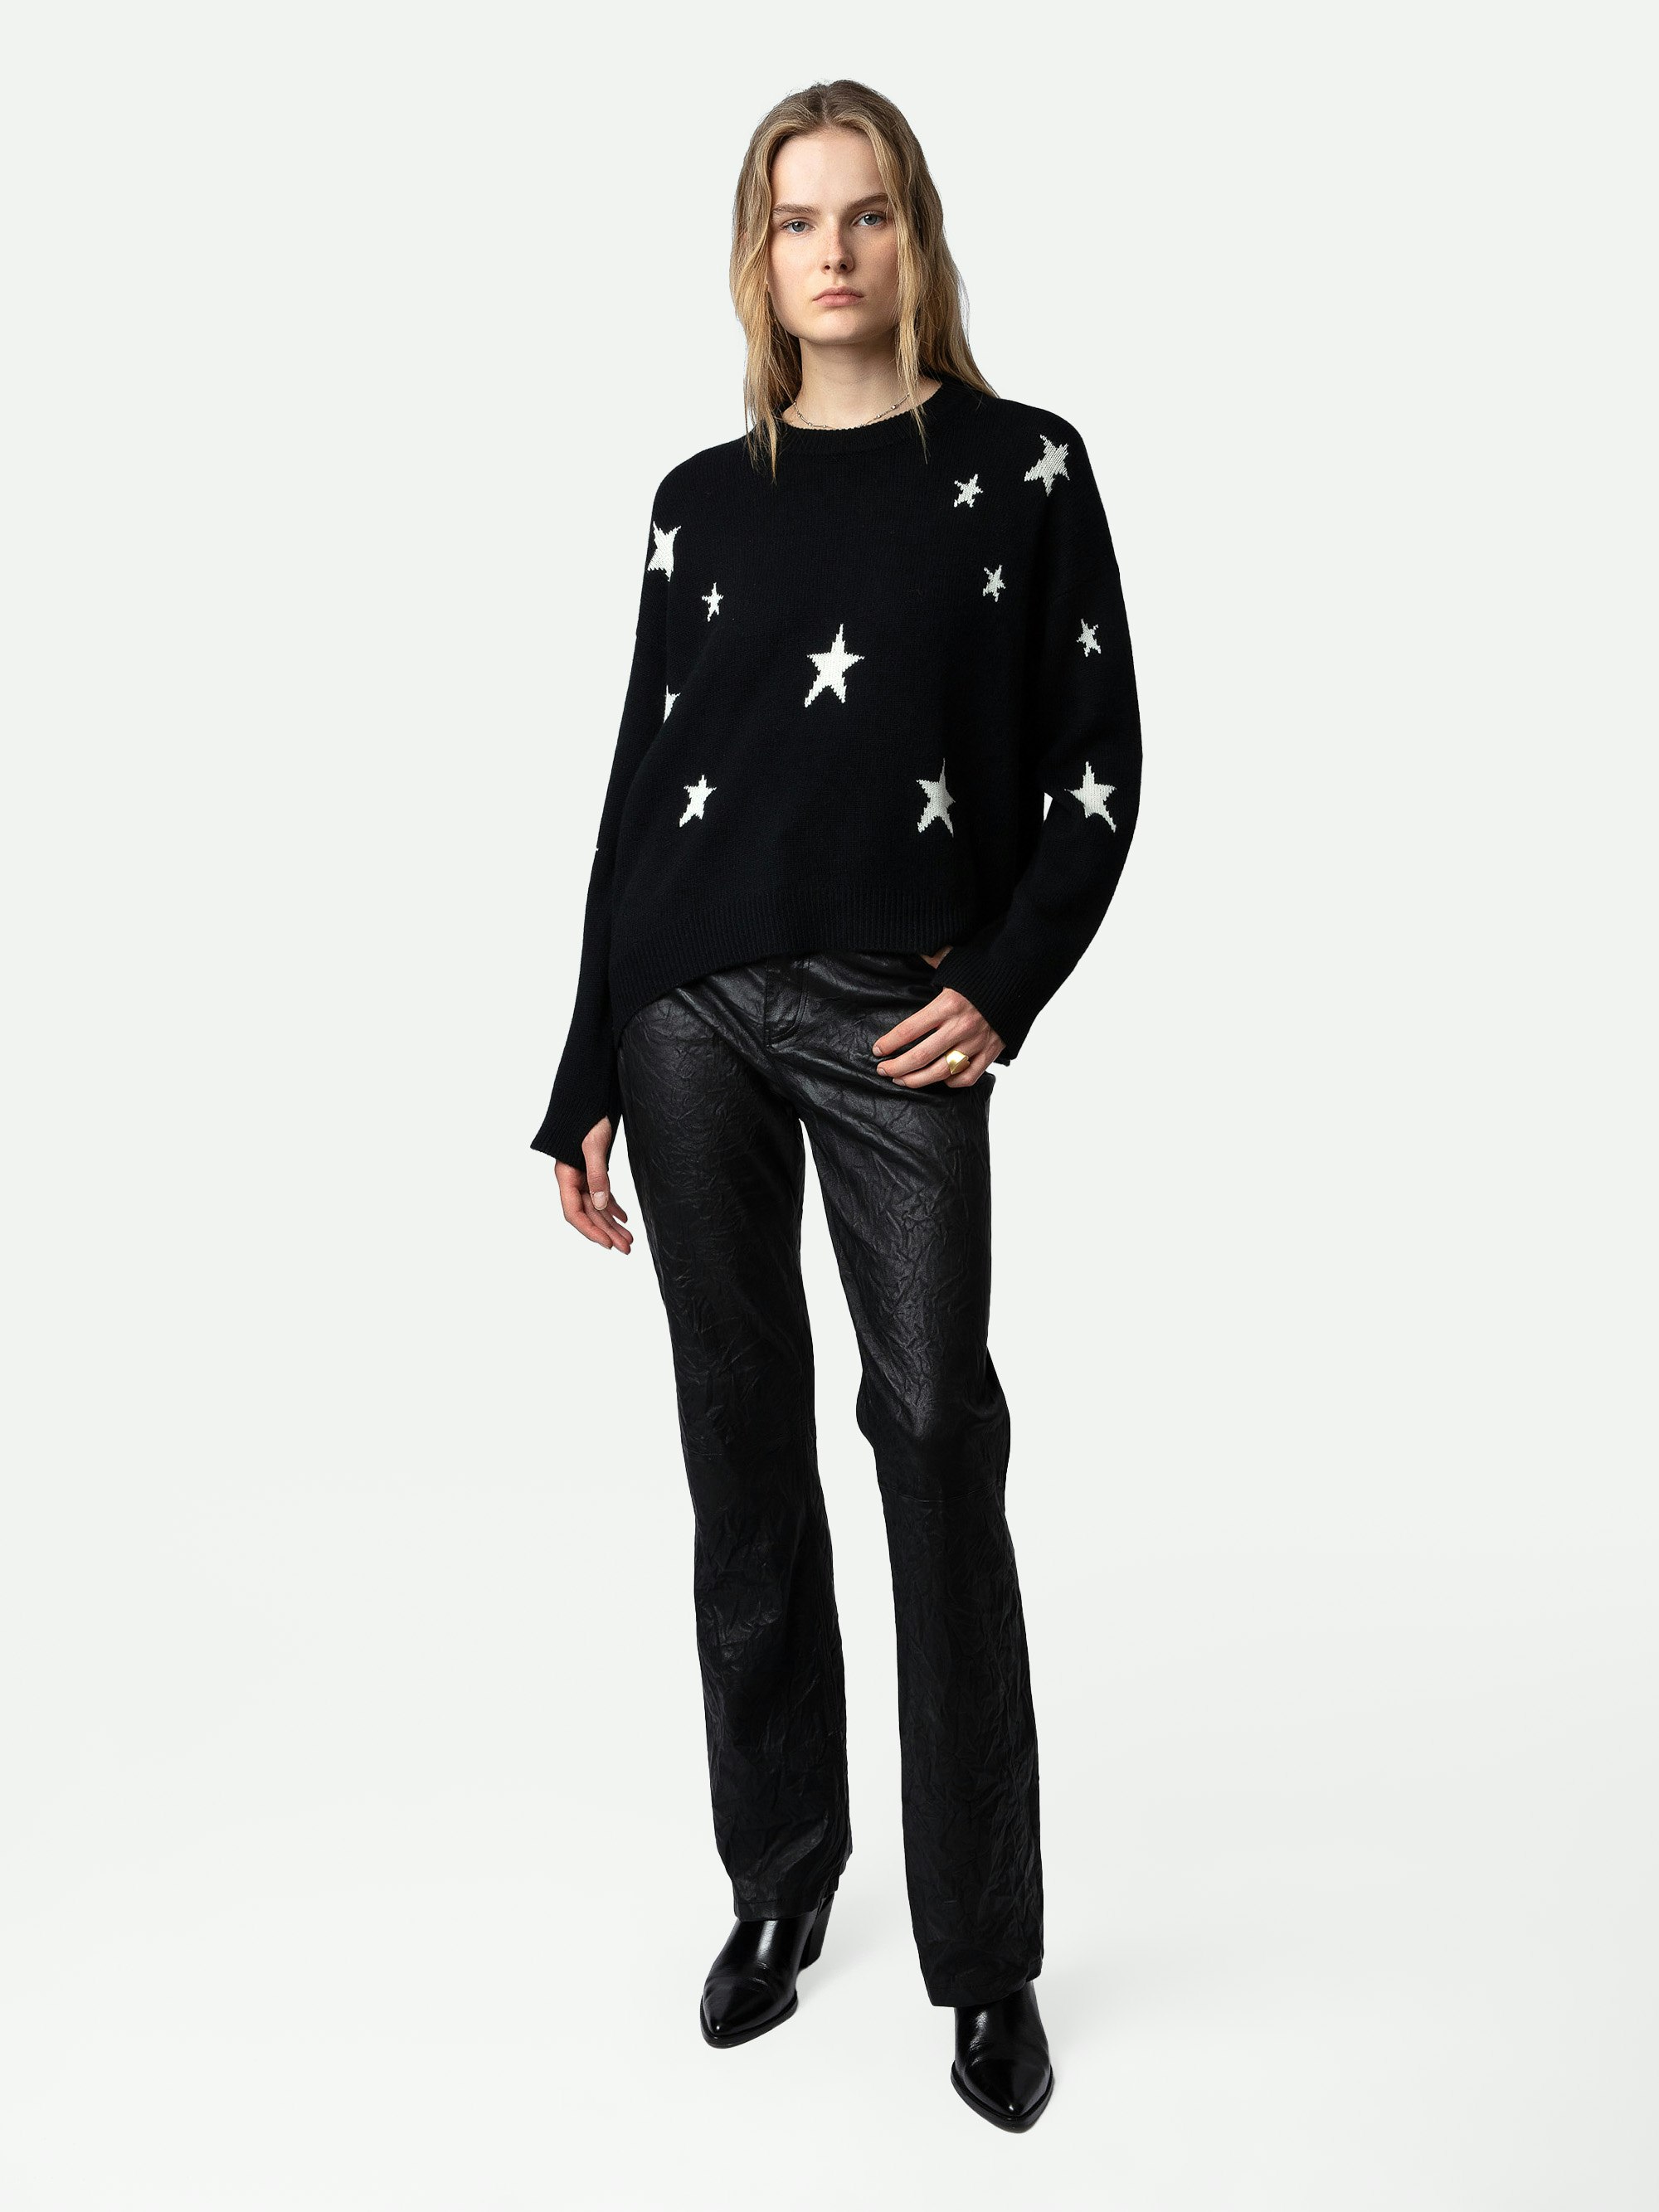 Markus 100% Cashmere Stars Jumper - 100% cashmere sweater with motif.